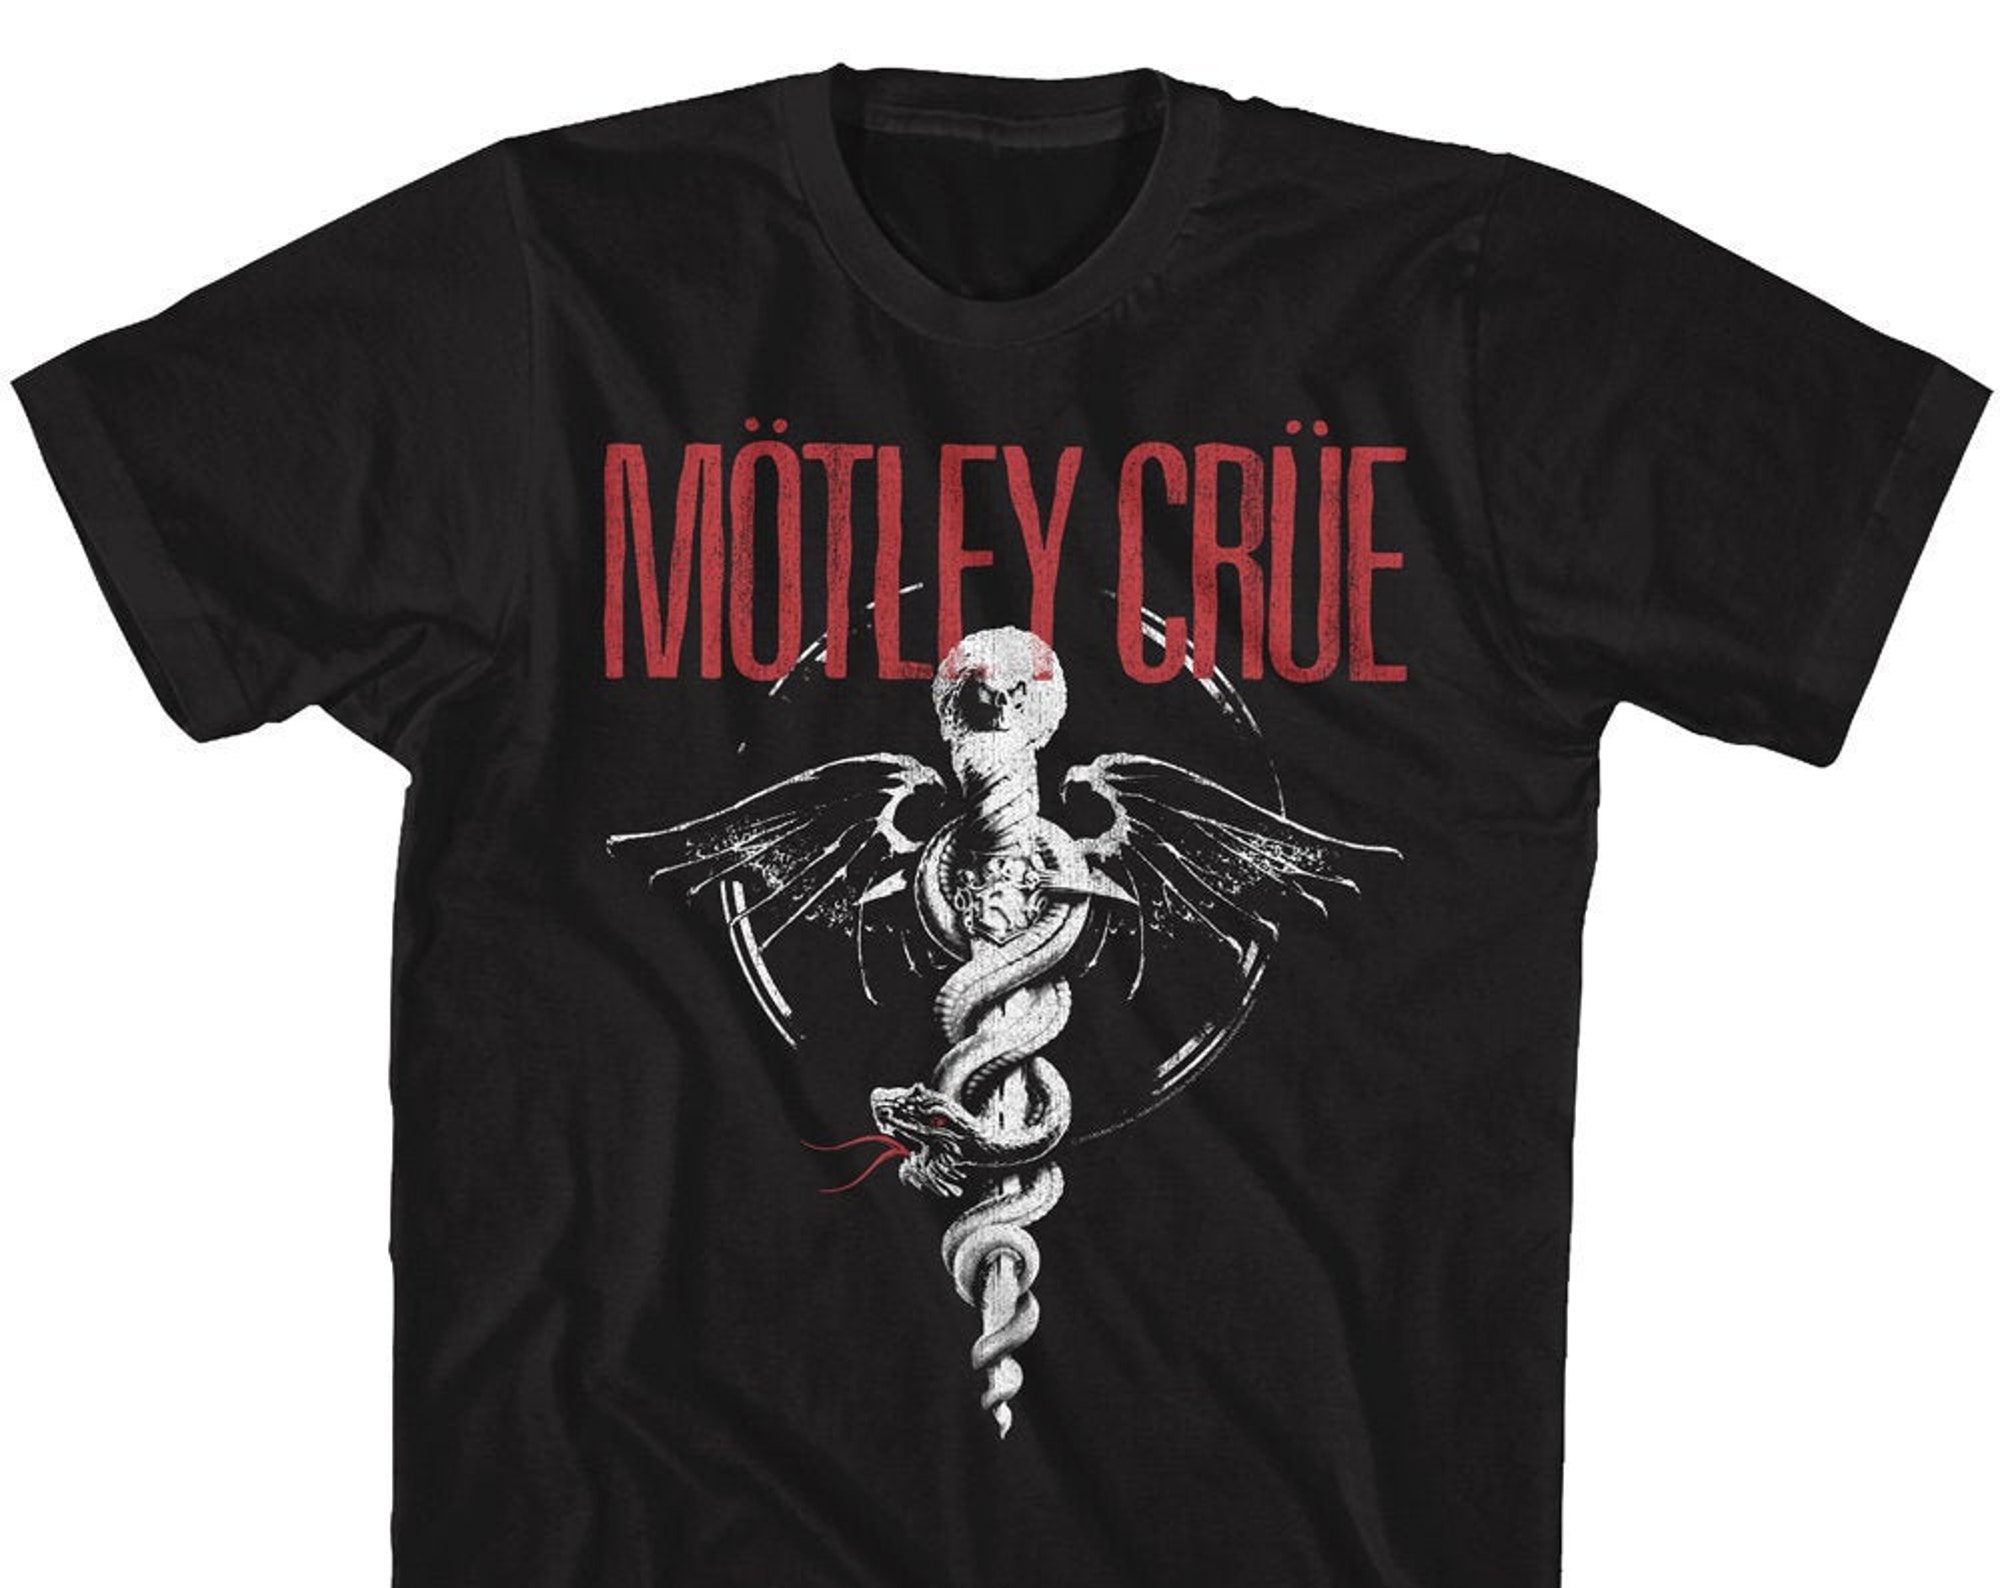 Discover Maglietta T-Shirt Motley Crue Band Per Uomo Donna Bambini - Rock Off Motley Crue Feel Good